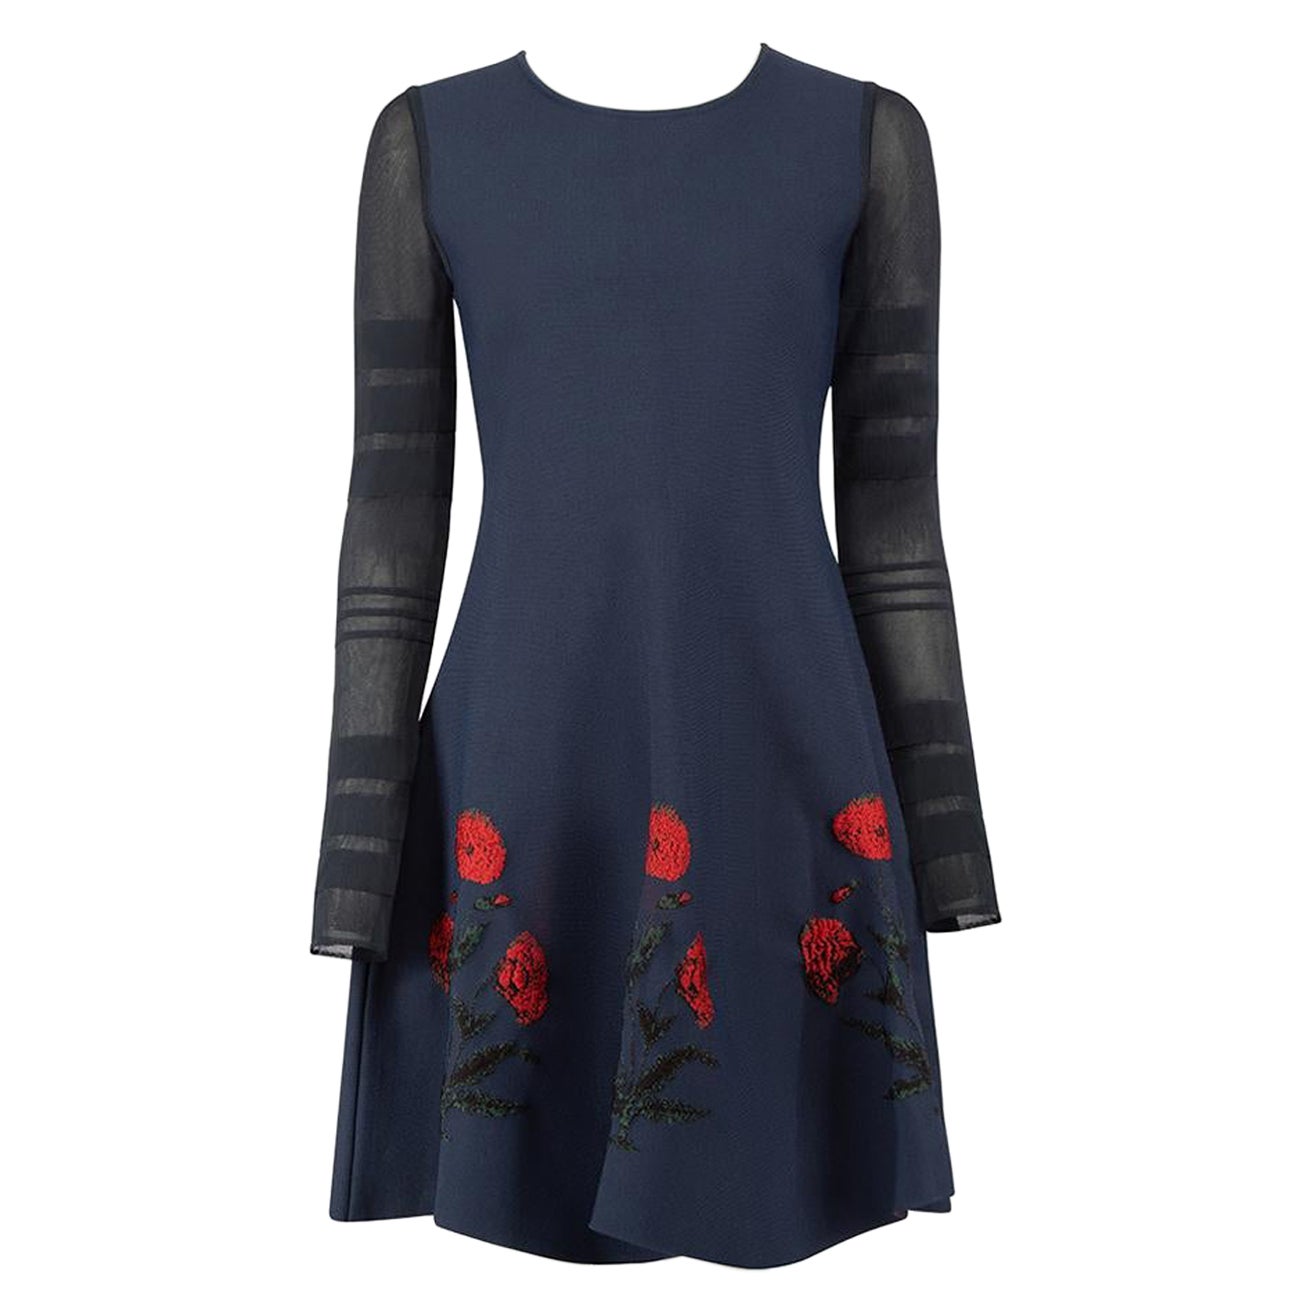 Oscar de la Renta Navy Stretch-Knit Poppy Accent Dress Size L For Sale